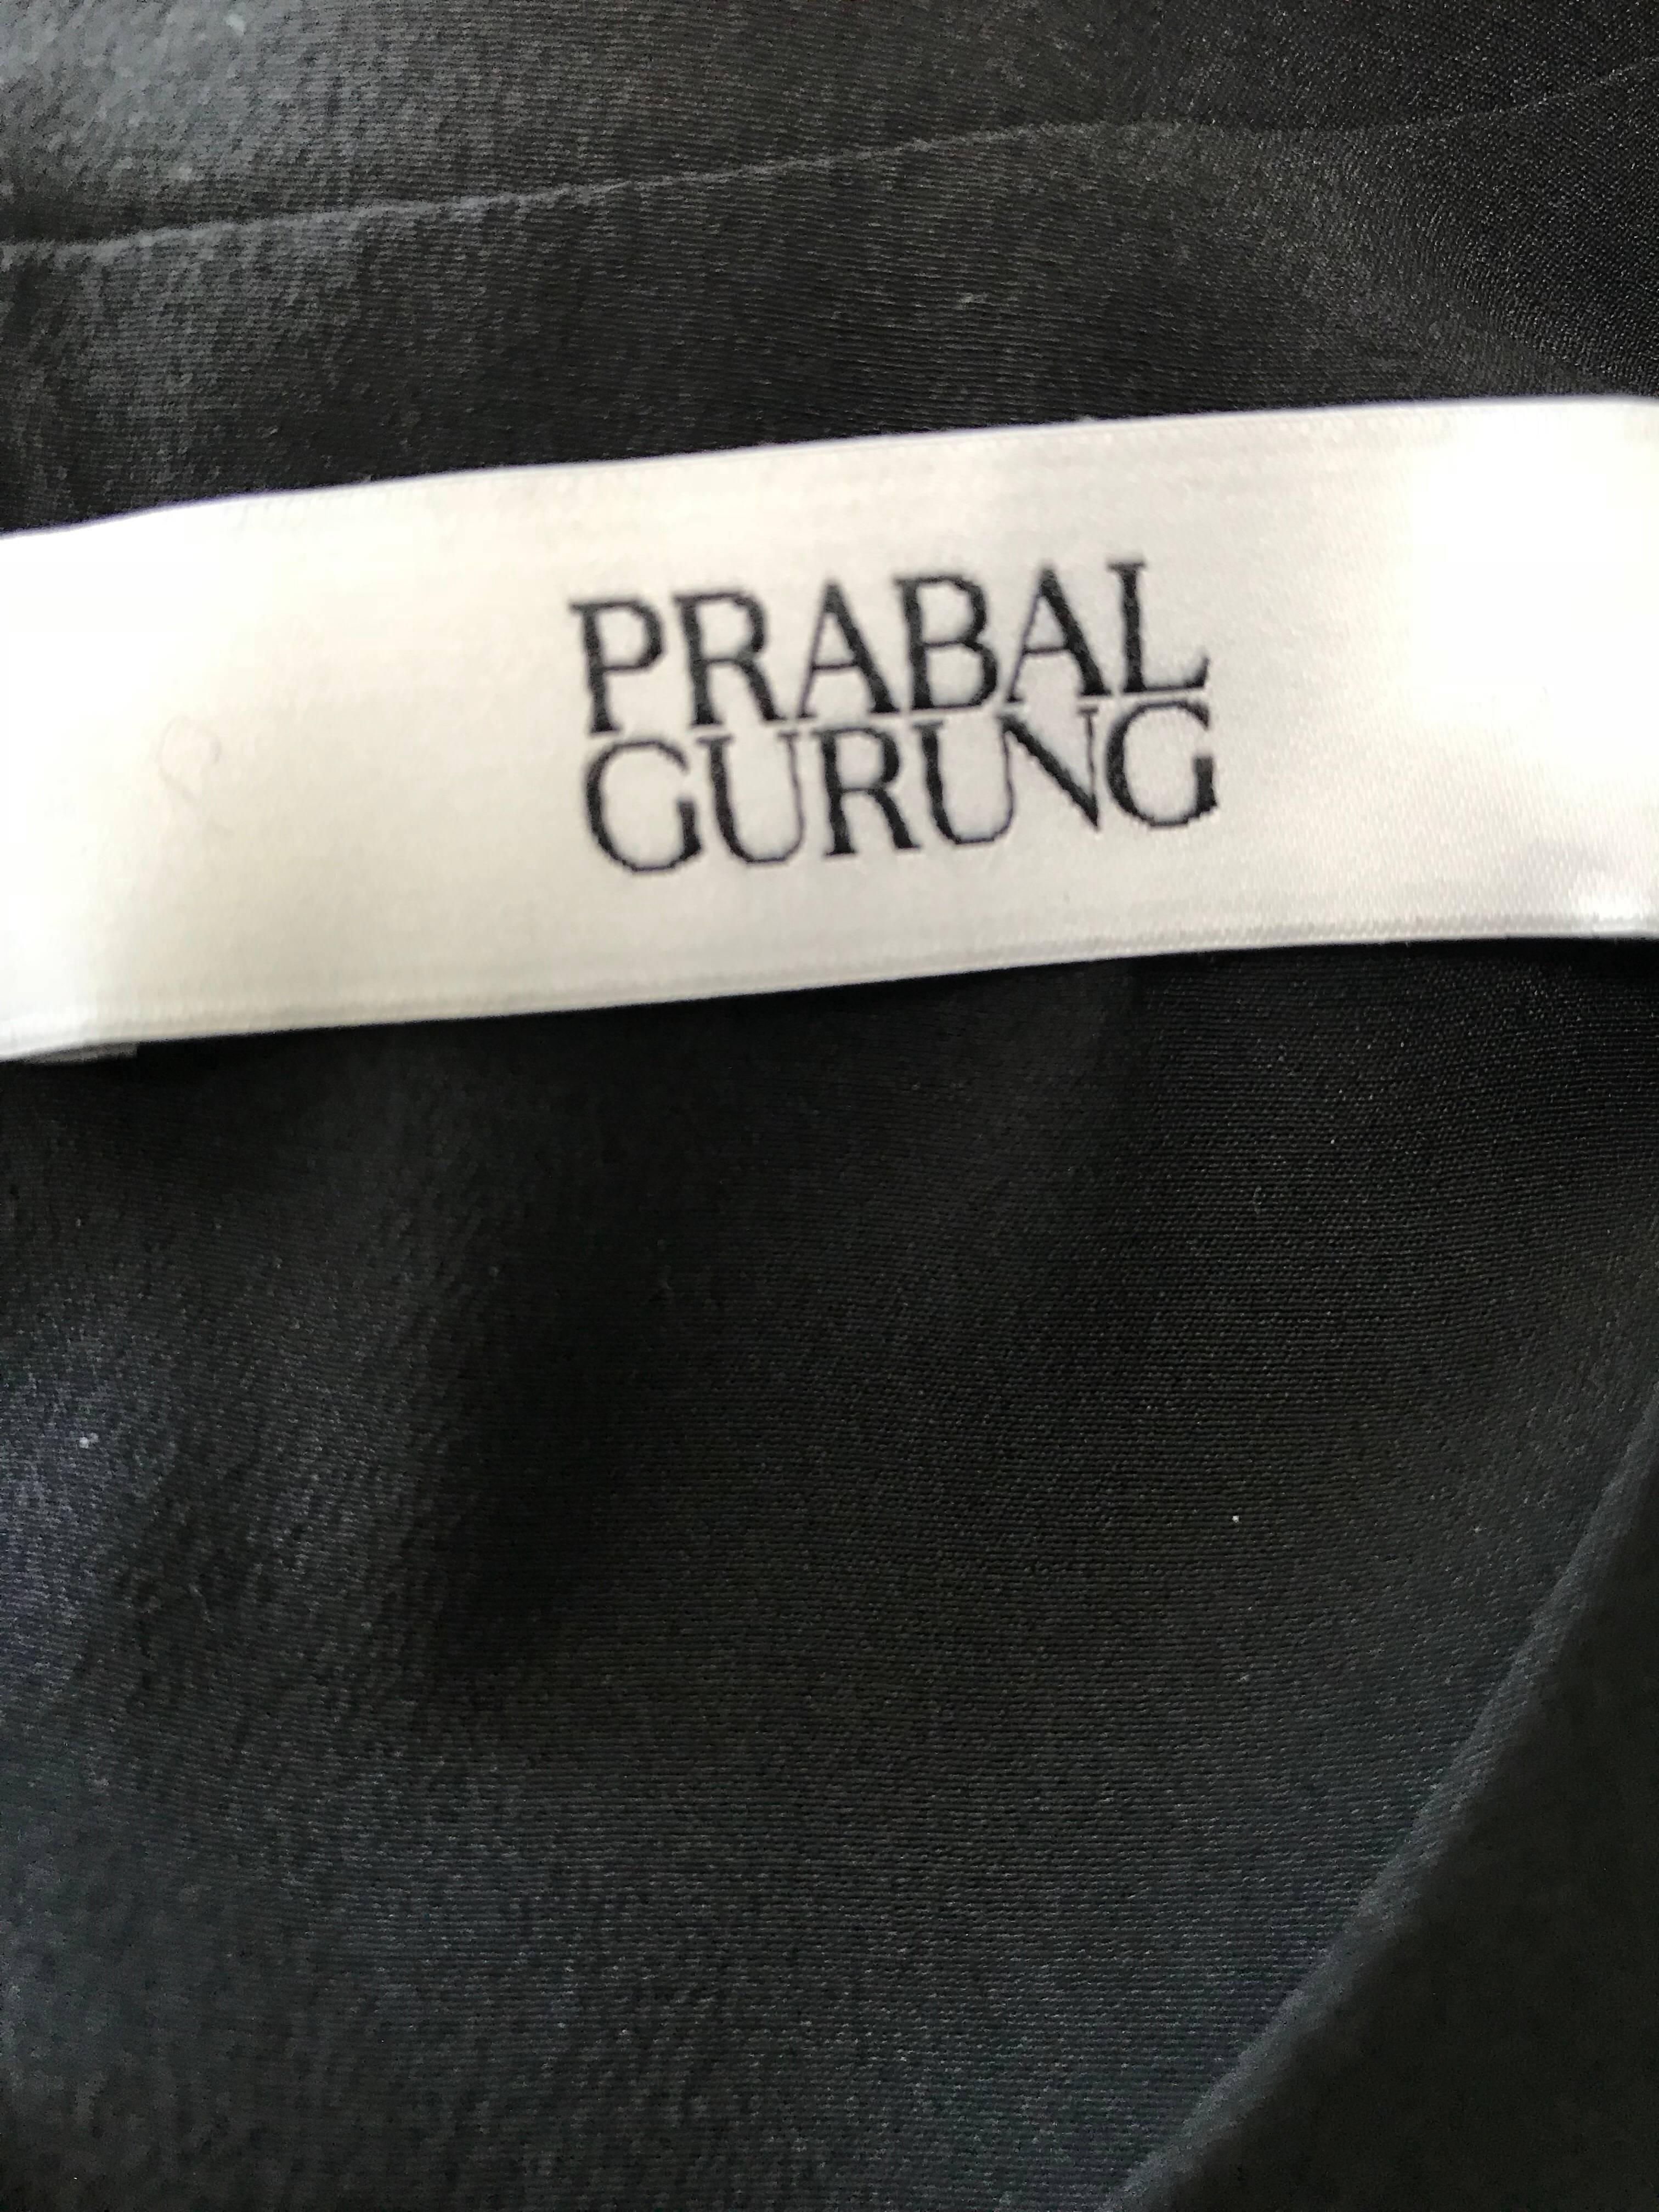 New Prabal Gurung Green and Black Color Block Size 6 / 8 Silk Mod Sheath Dress For Sale 3